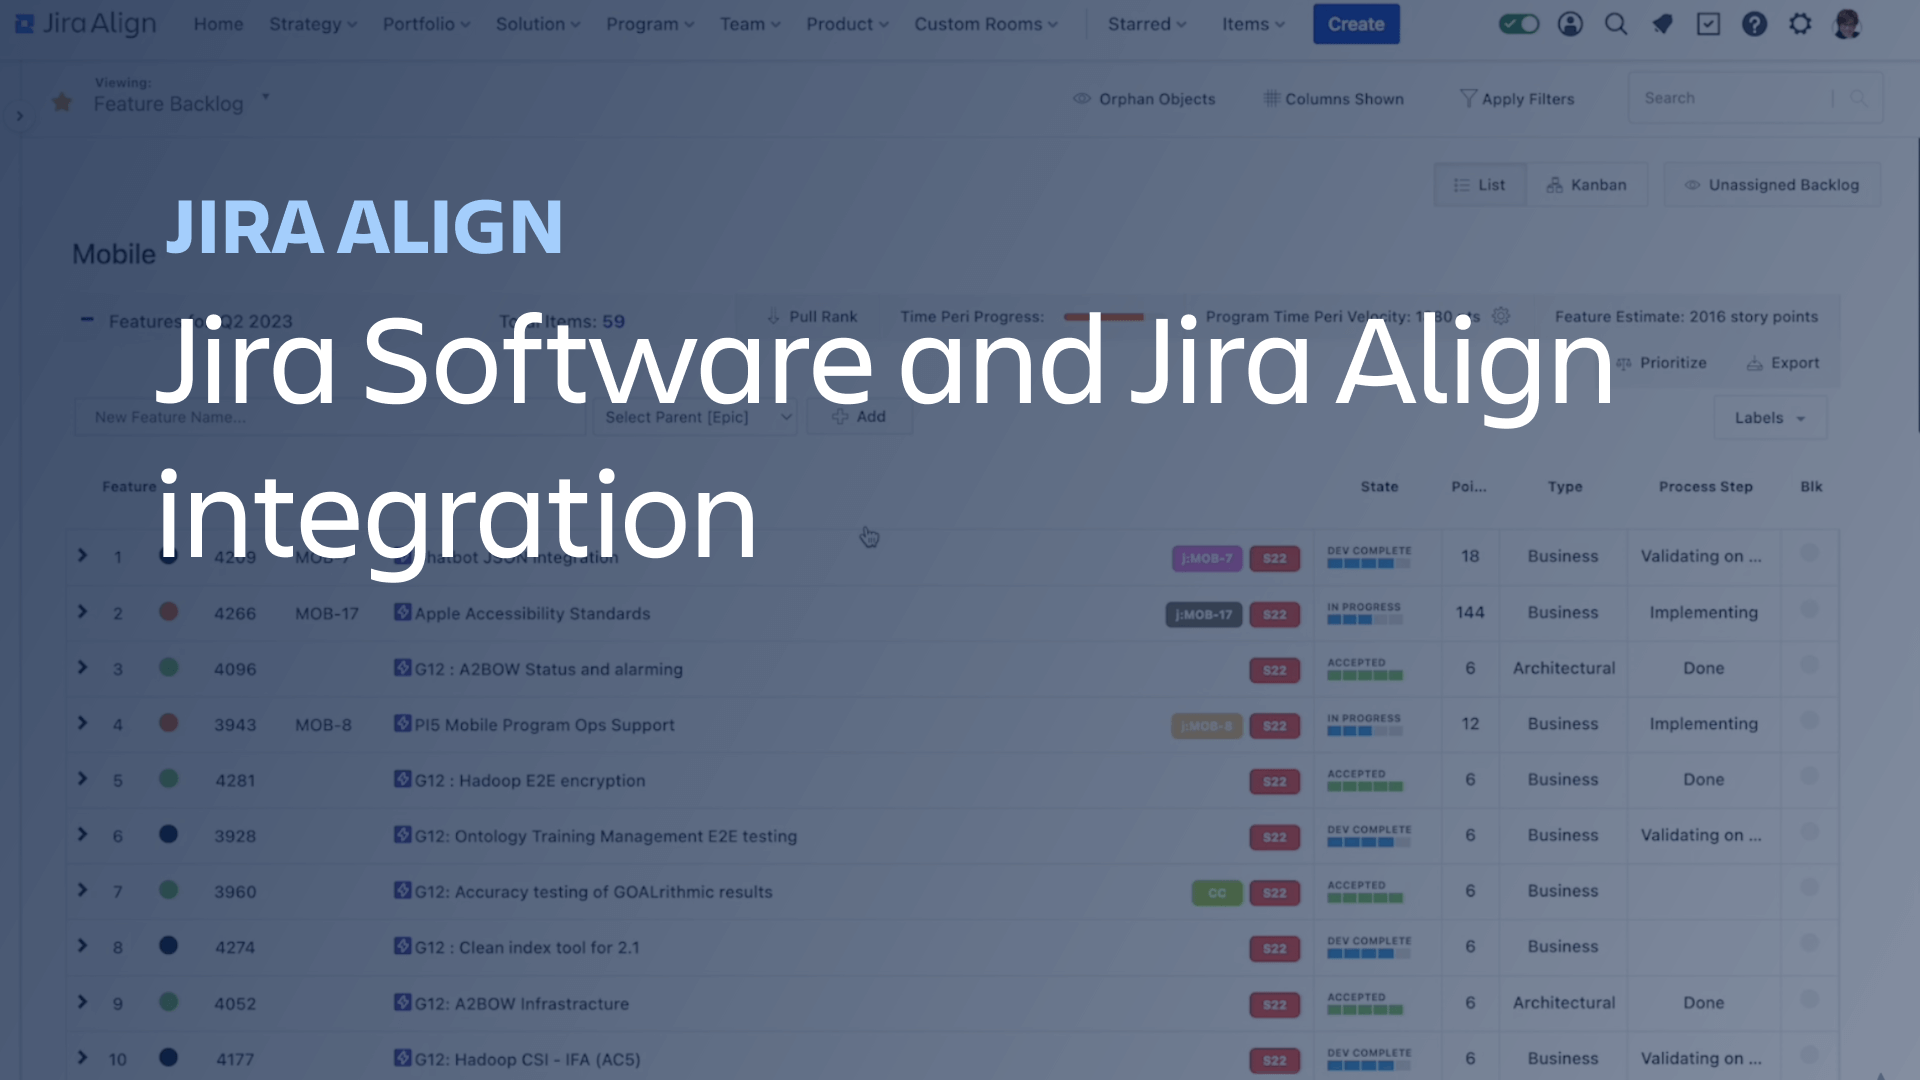 Jira Software and Jira Align Integration